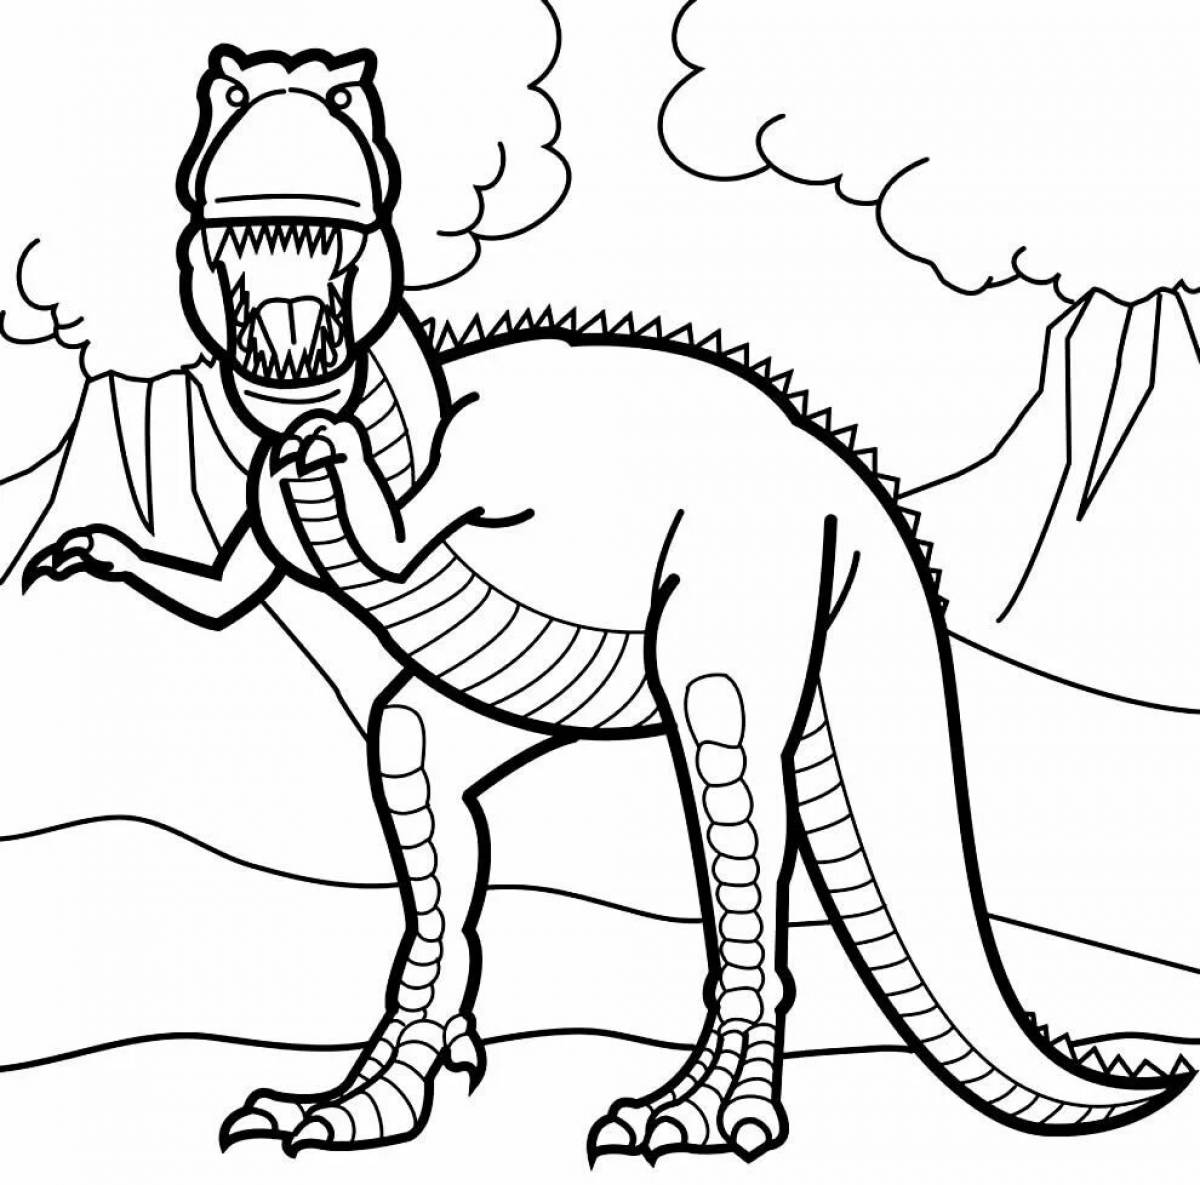 Dino rex #5